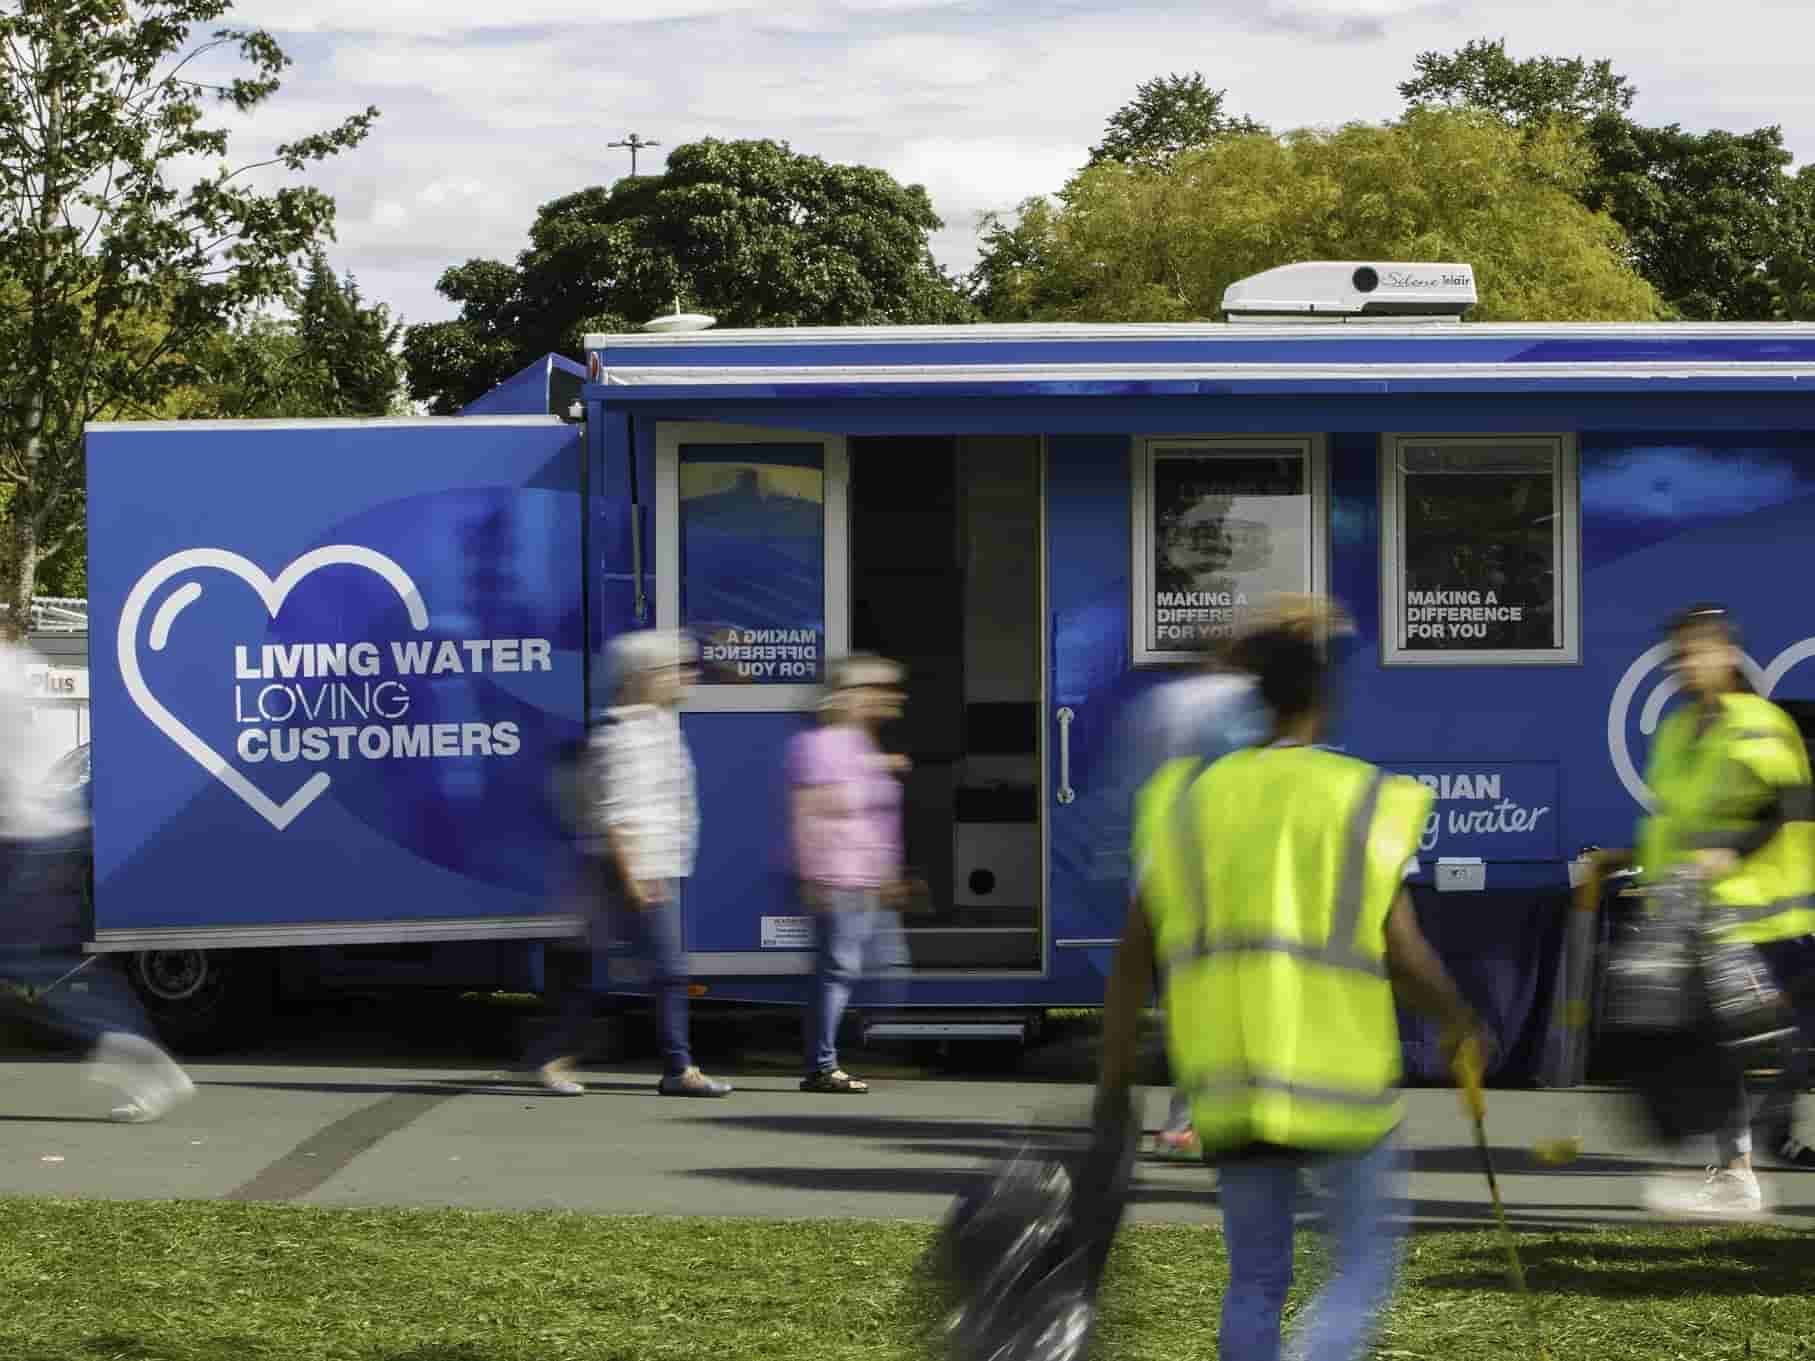 Northumbrian Water customer engagement vehicle Flo